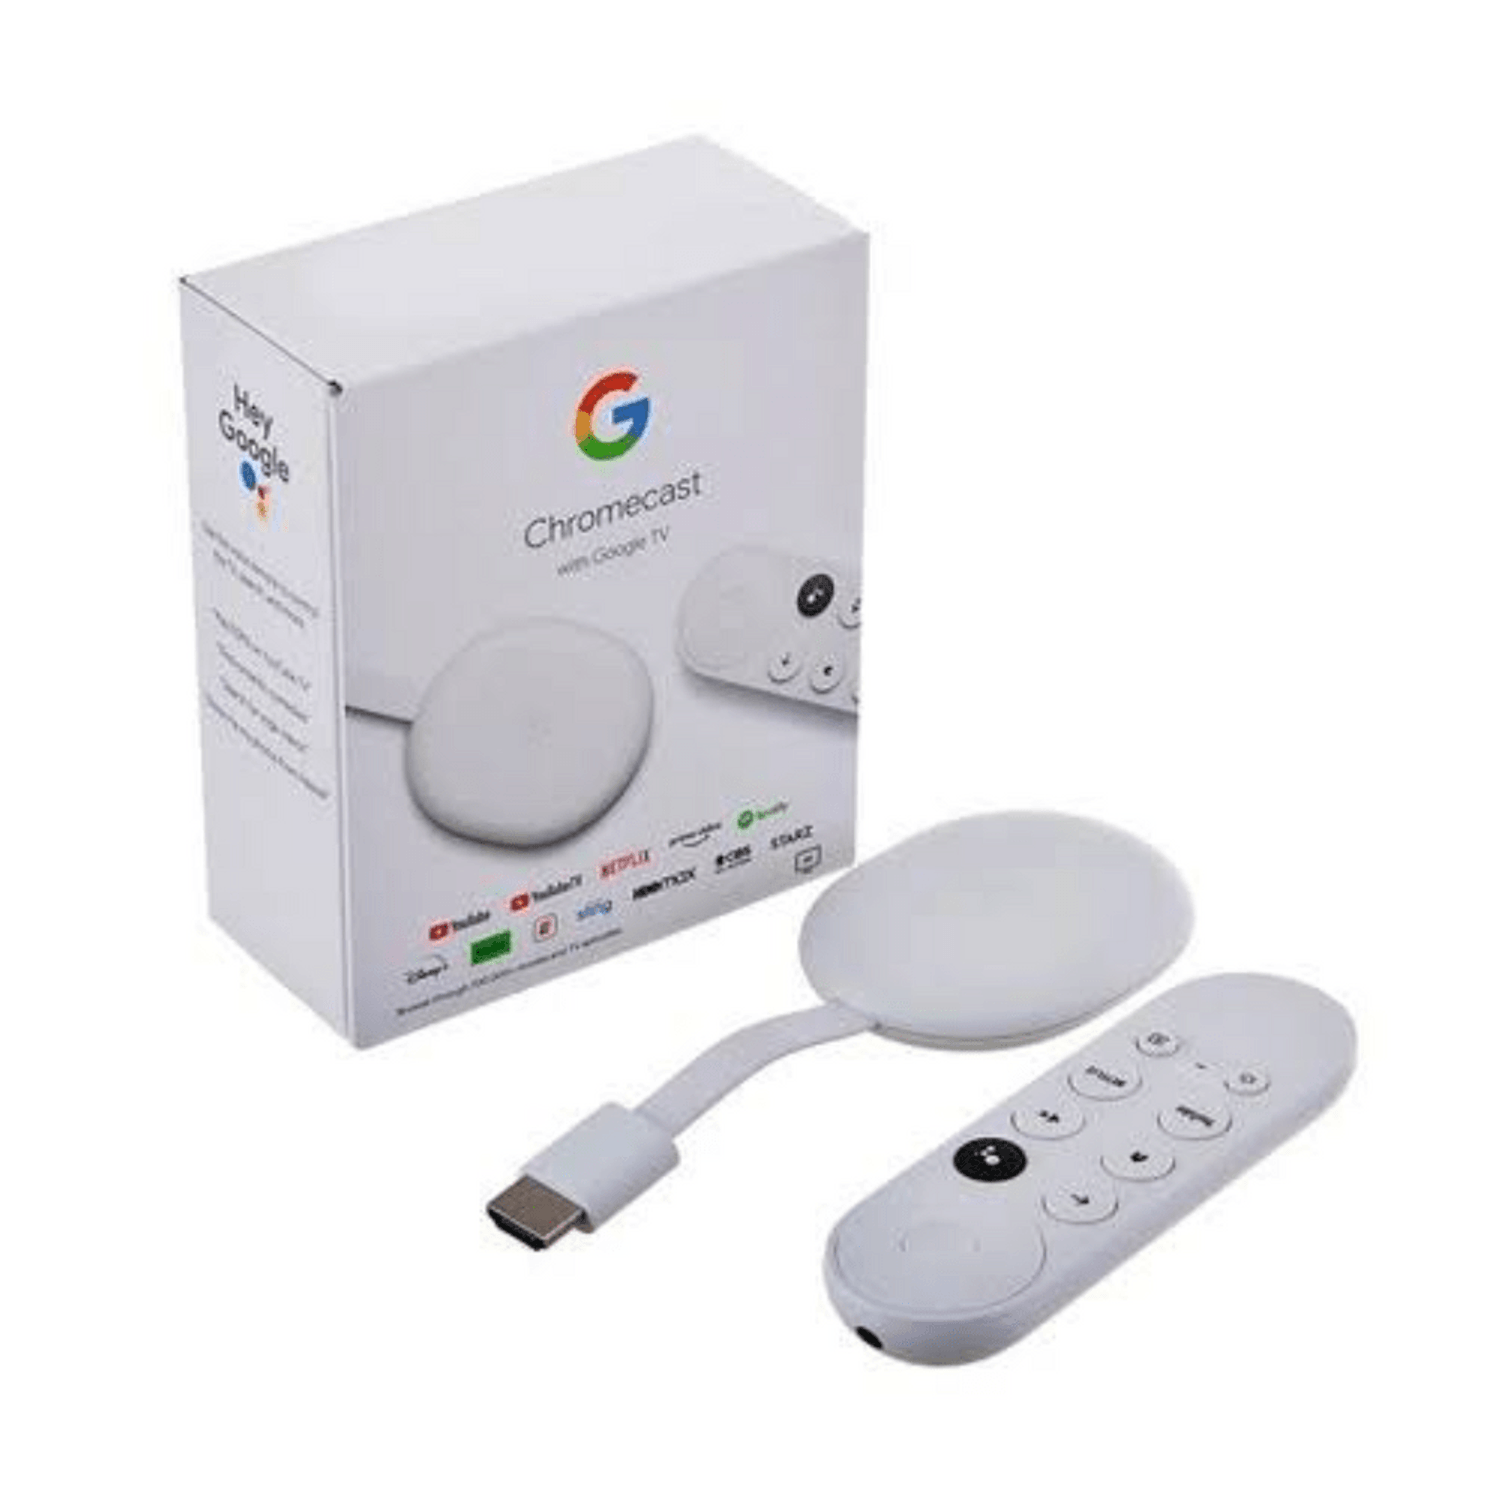 Chromecast de Google: todo lo que necesitas saber